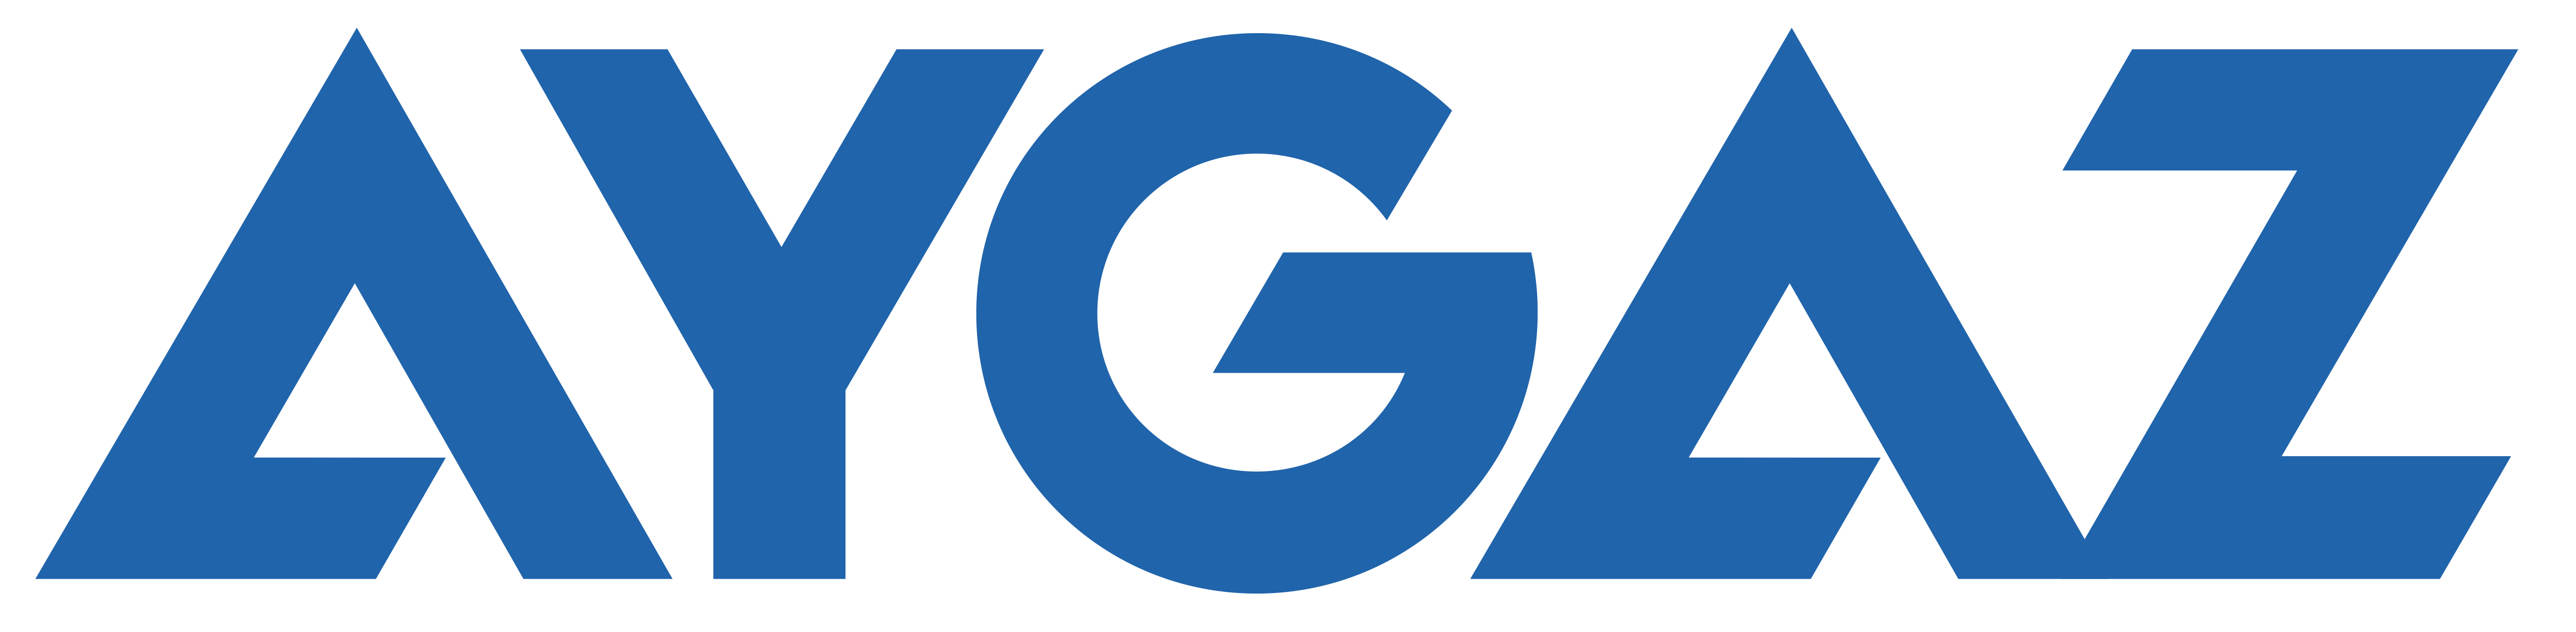 Aygaz As Brand Logo